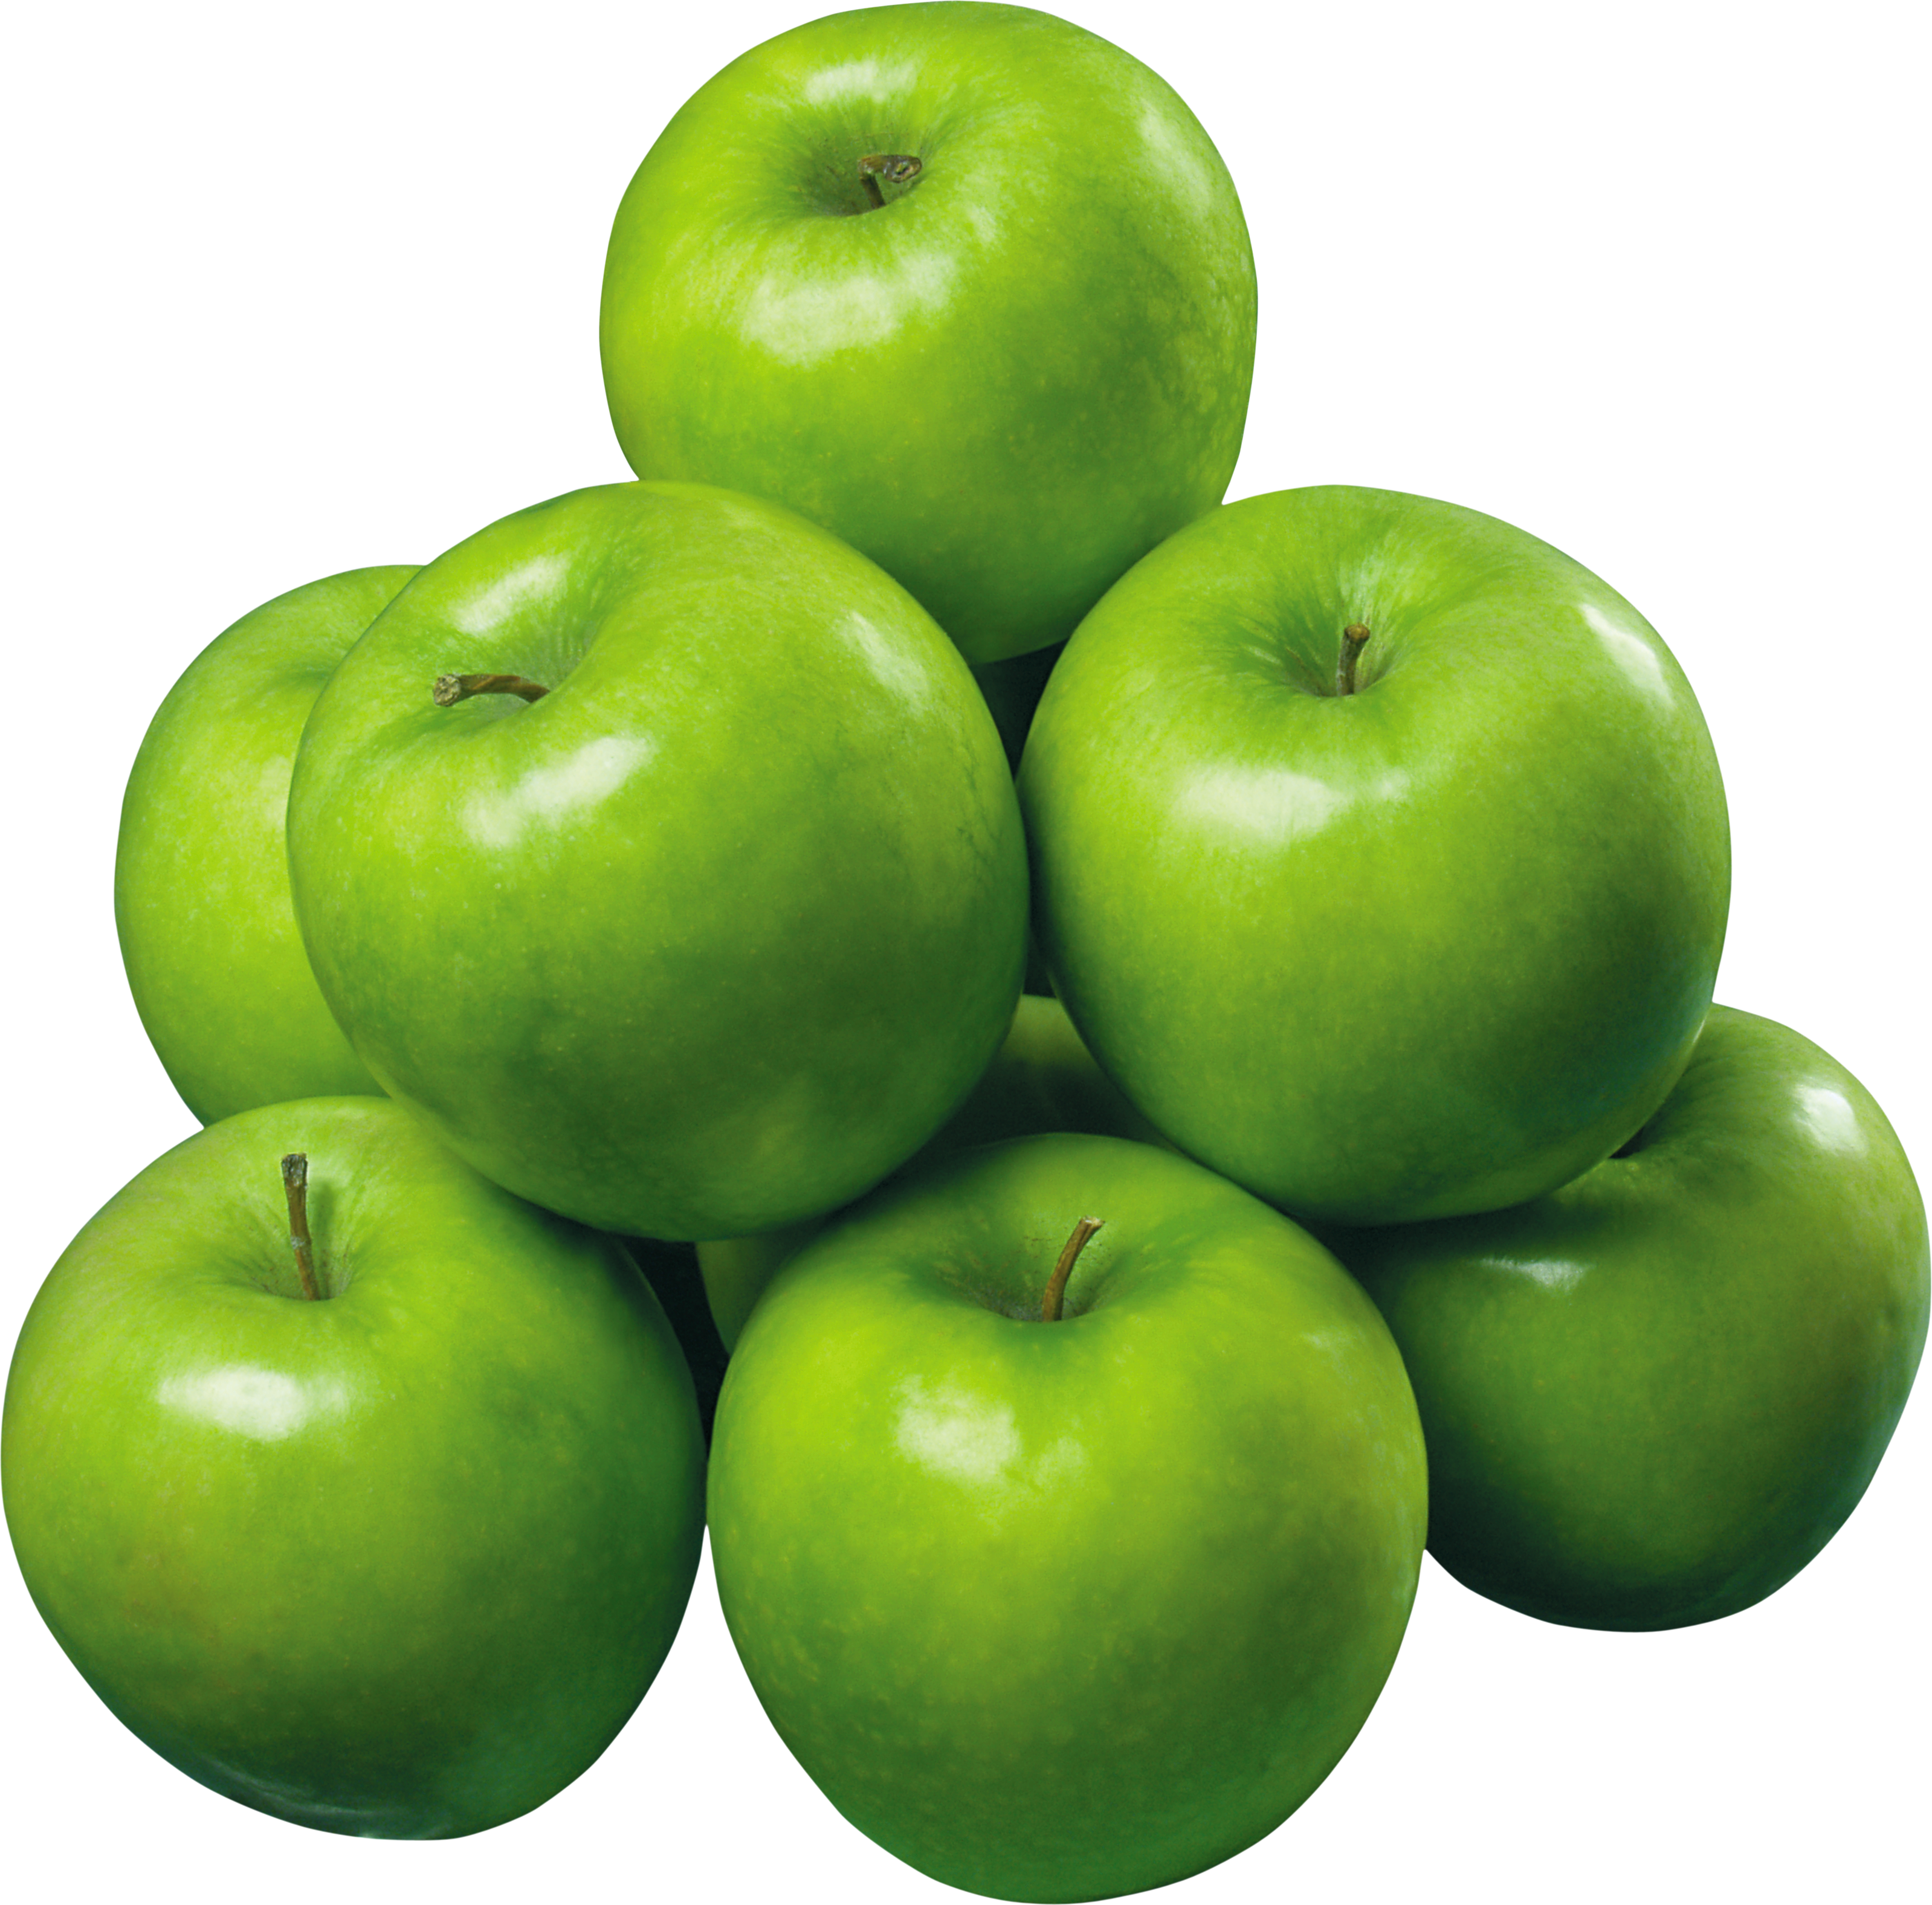 Green Apples PNG Image - PurePNG | Free transparent CC0 PNG Image ...